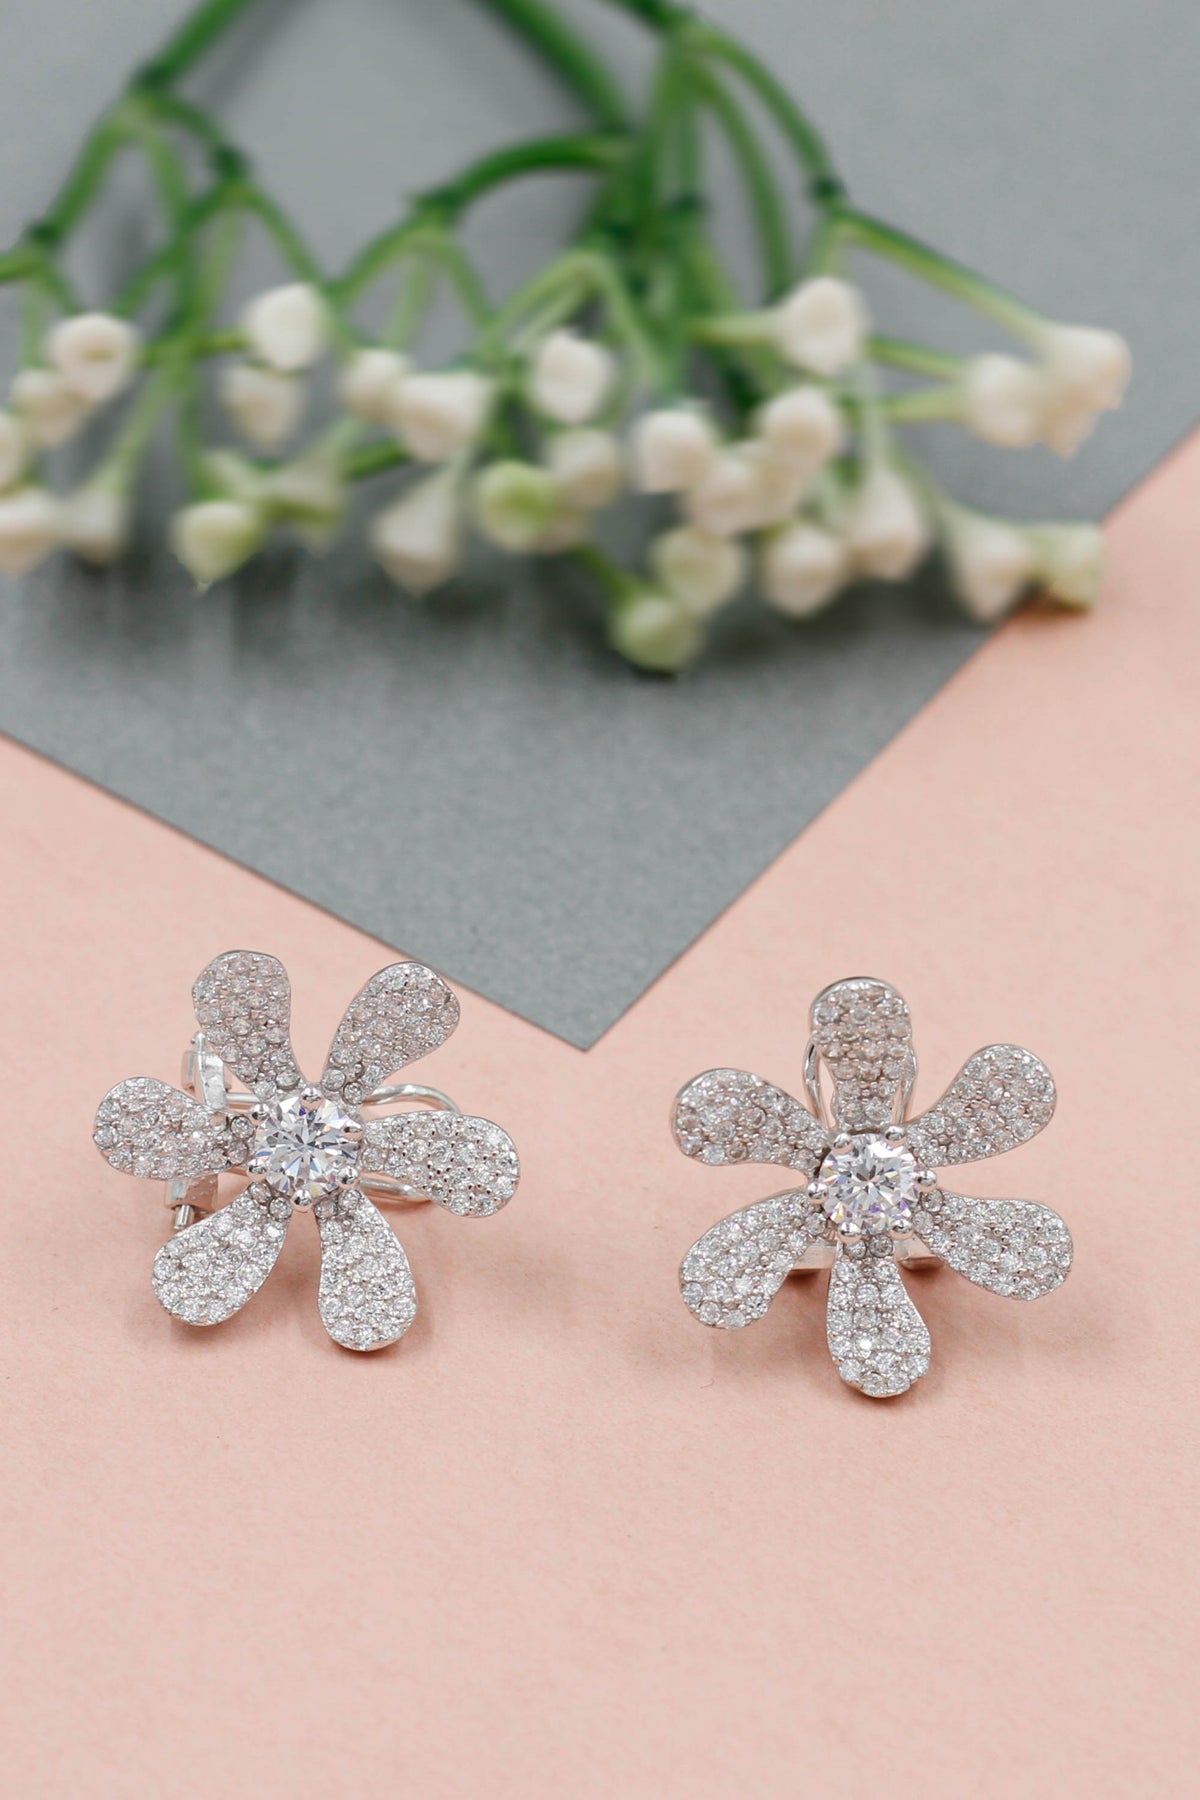 Enchanted Garden Silver Floral Earrings